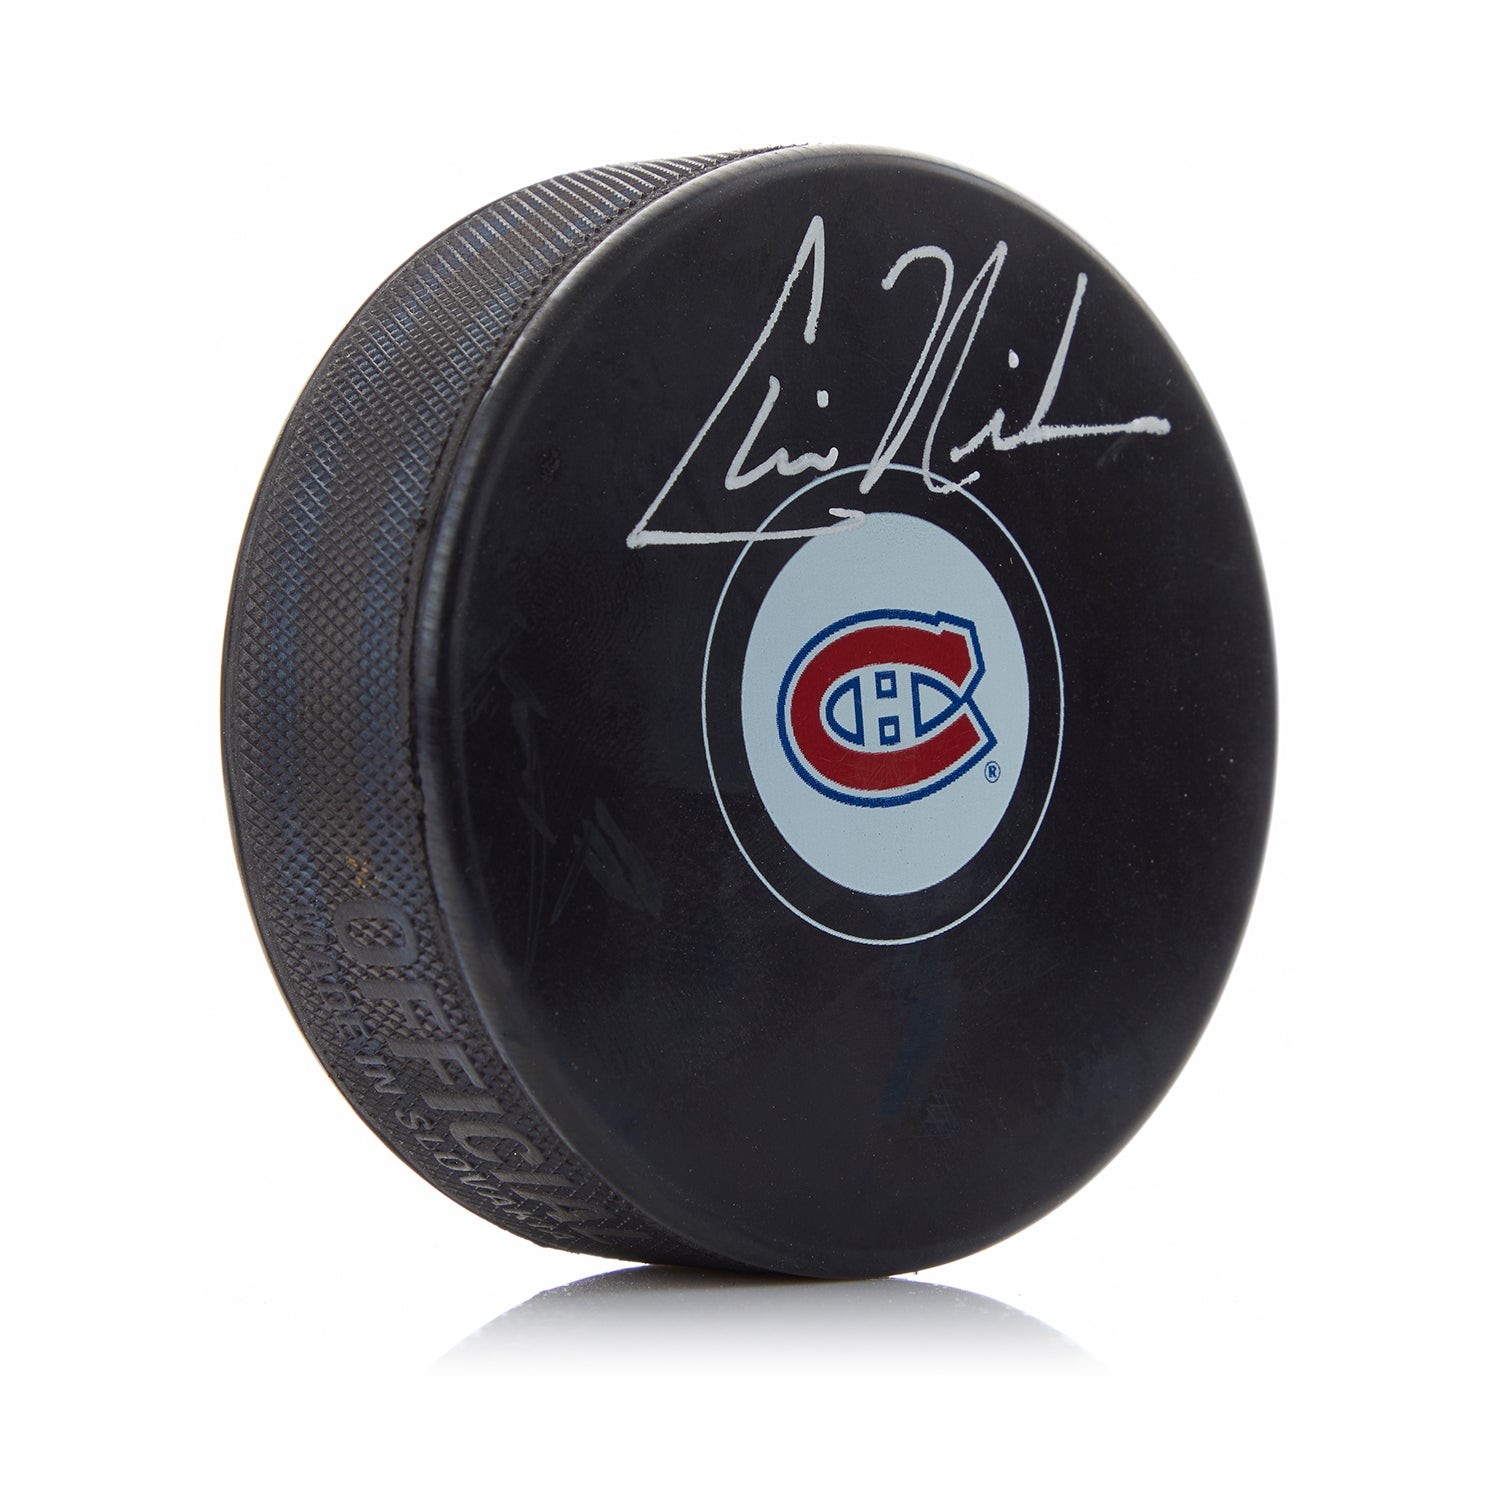 Pete Mahovlich Montreal Canadiens Autographed Fanatics Jersey –  CollectibleXchange